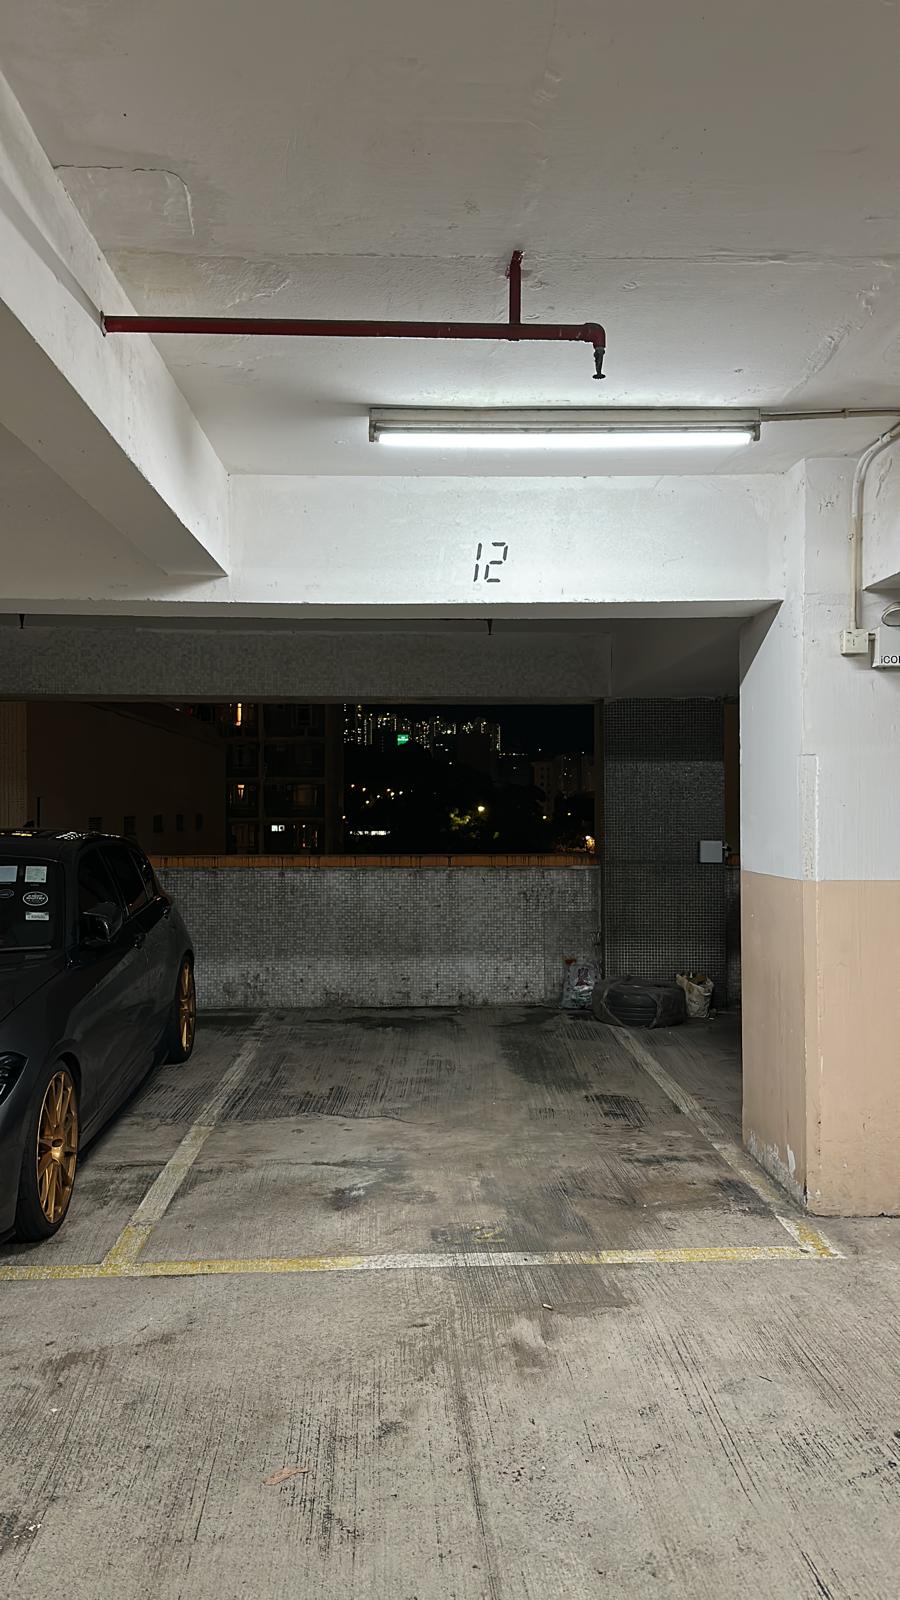 car-park-information-photo